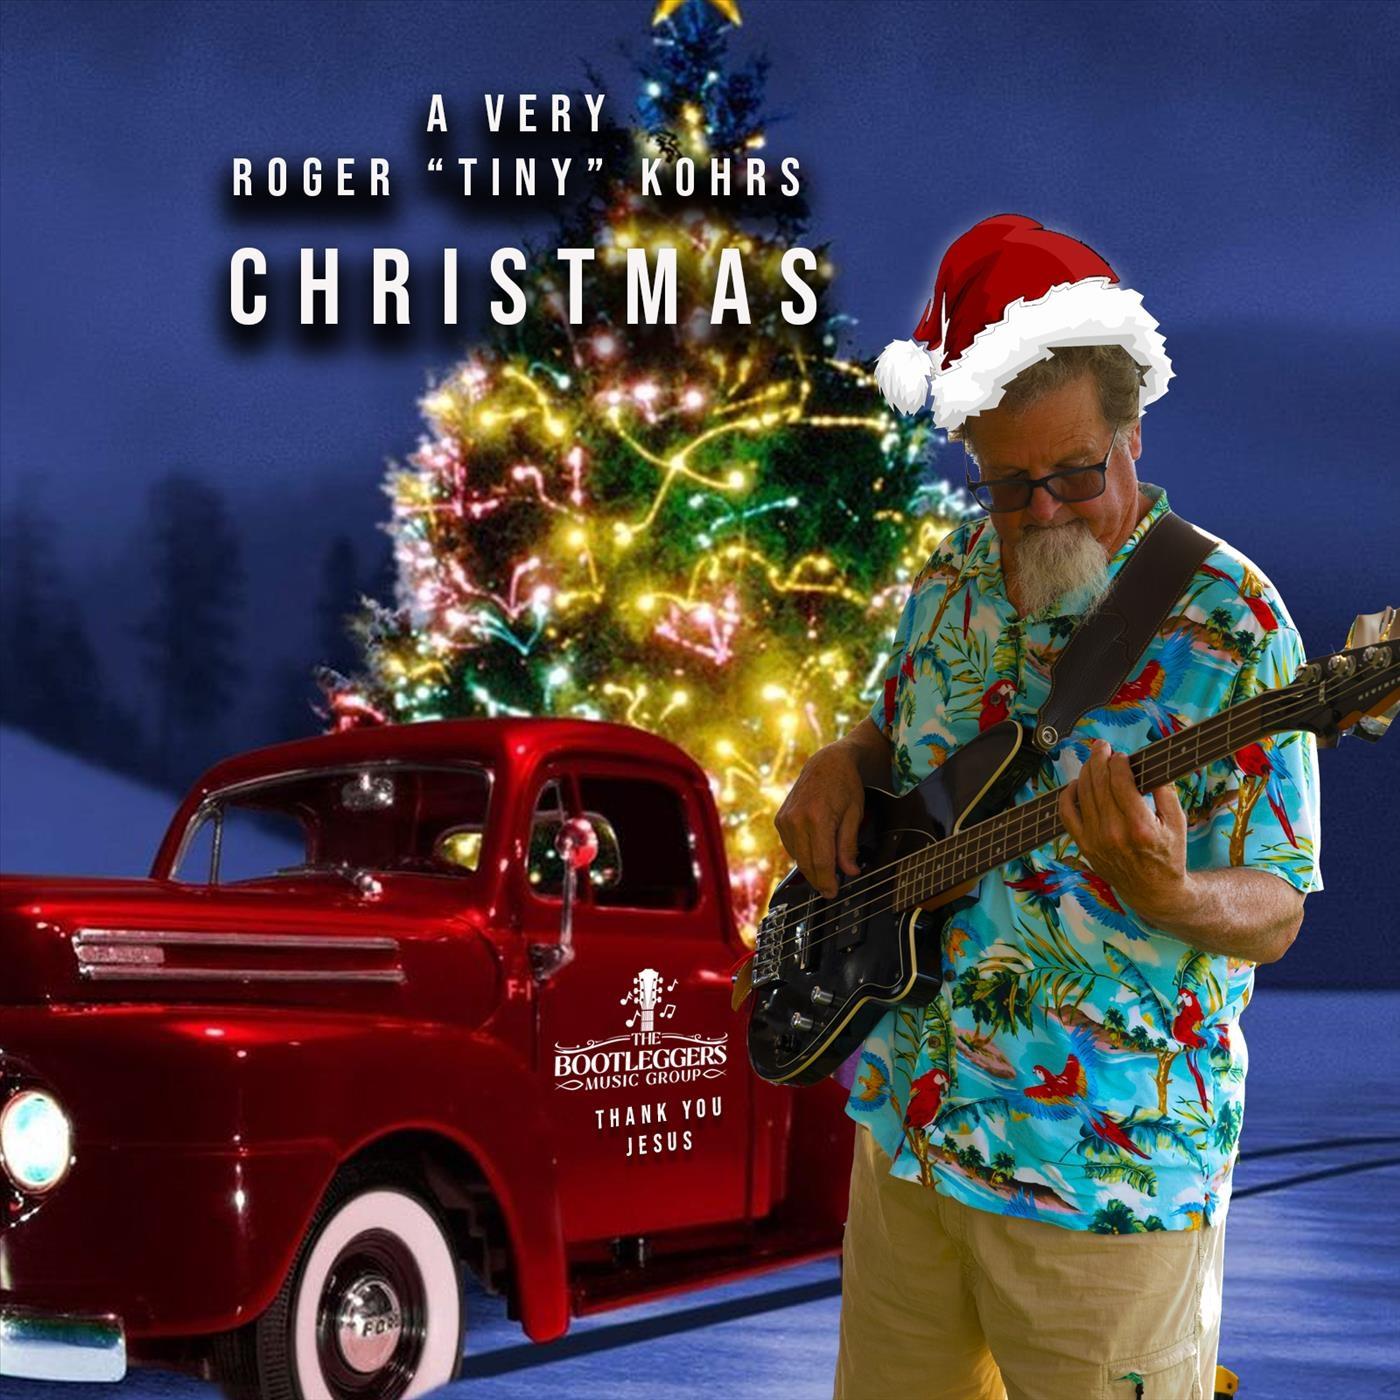 The Bootleggers Music Group - The Hawaiian Christmas Song